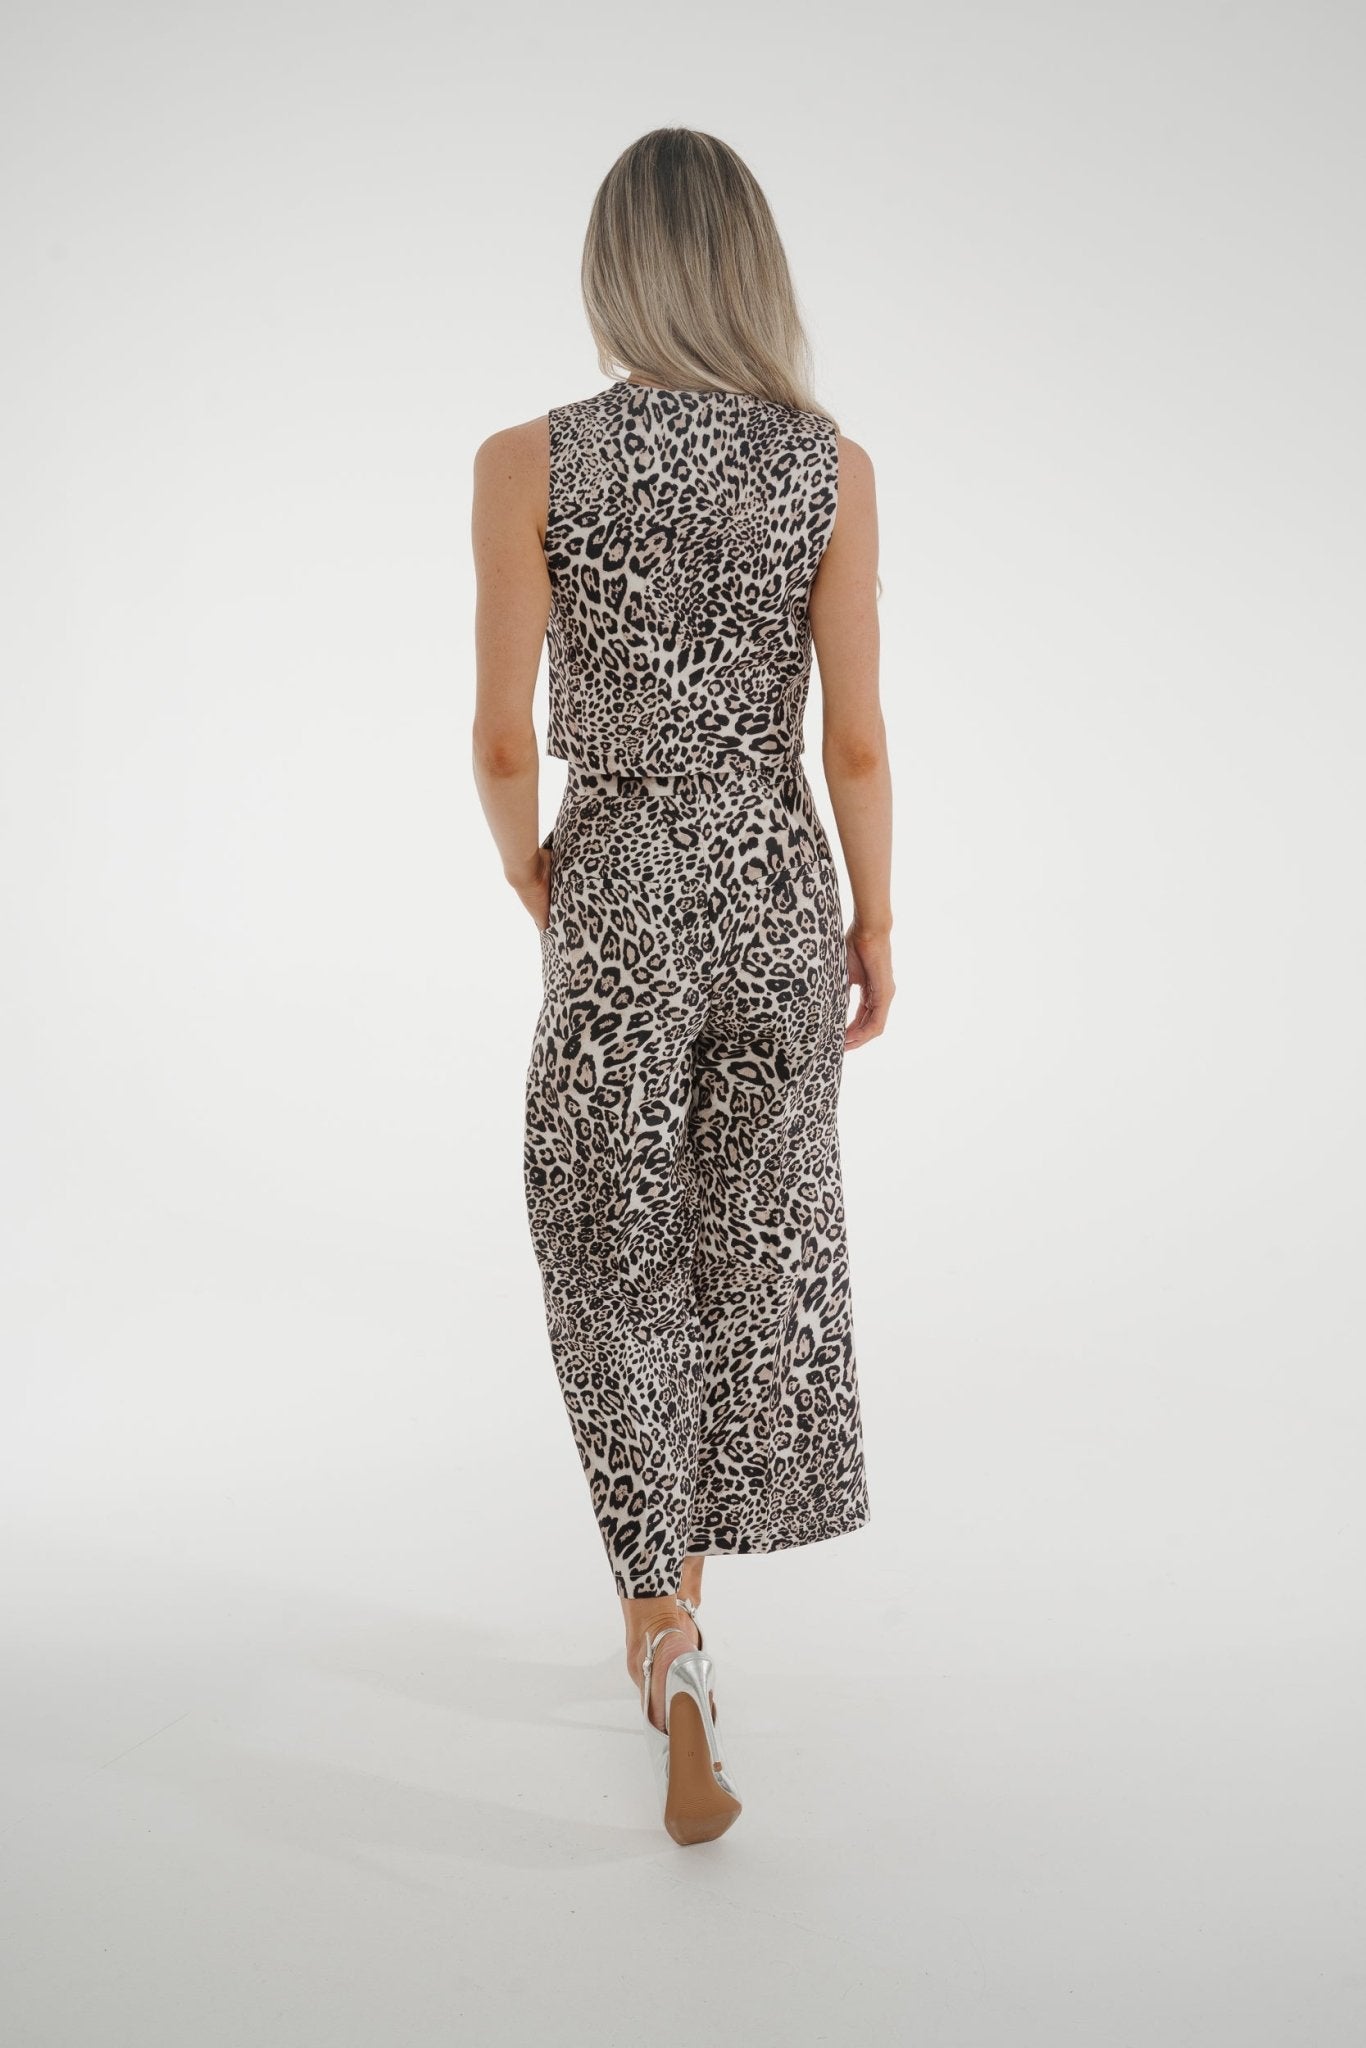 Maria Two Piece In Leopard Print - The Walk in Wardrobe